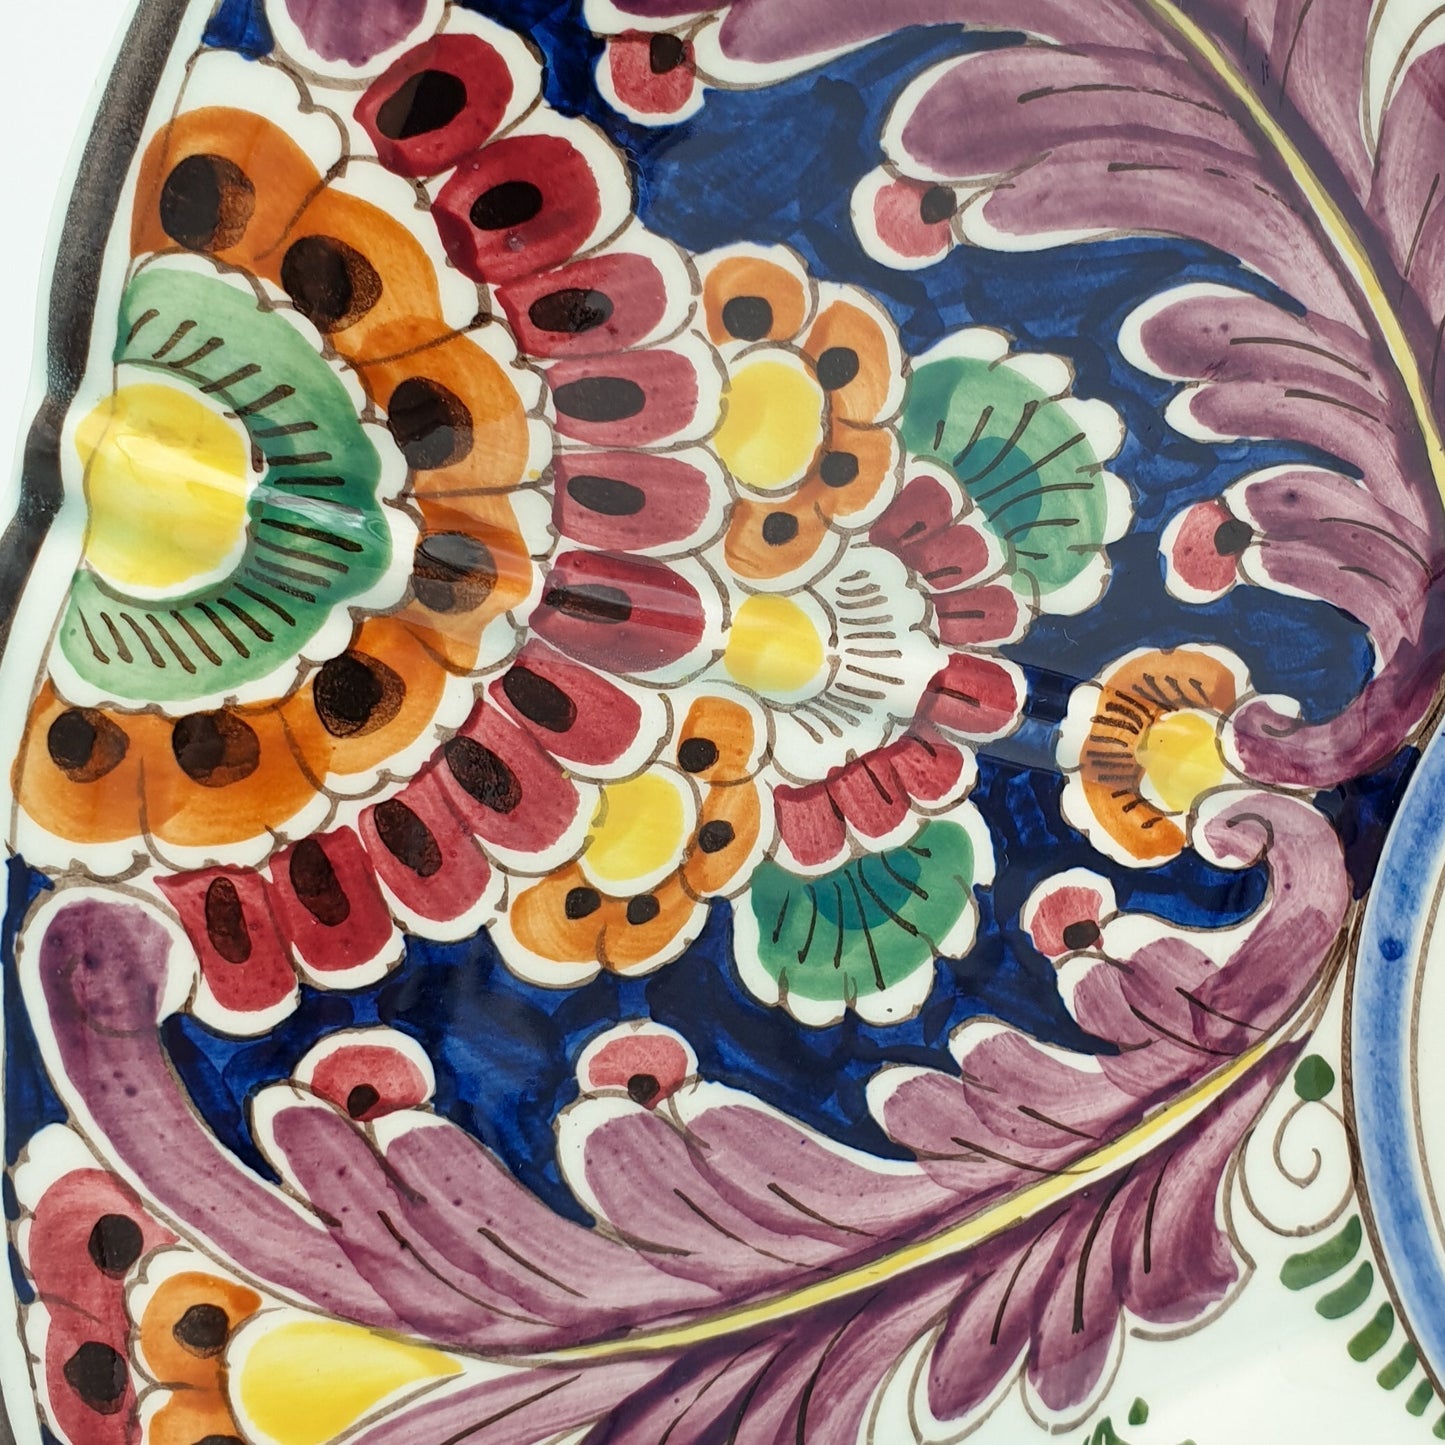 VELSEN SASSENHEIM Delfts Polychrome Large Bird Floral Decor Ceramic Fruit Bowl / Dish Mollaris.com 